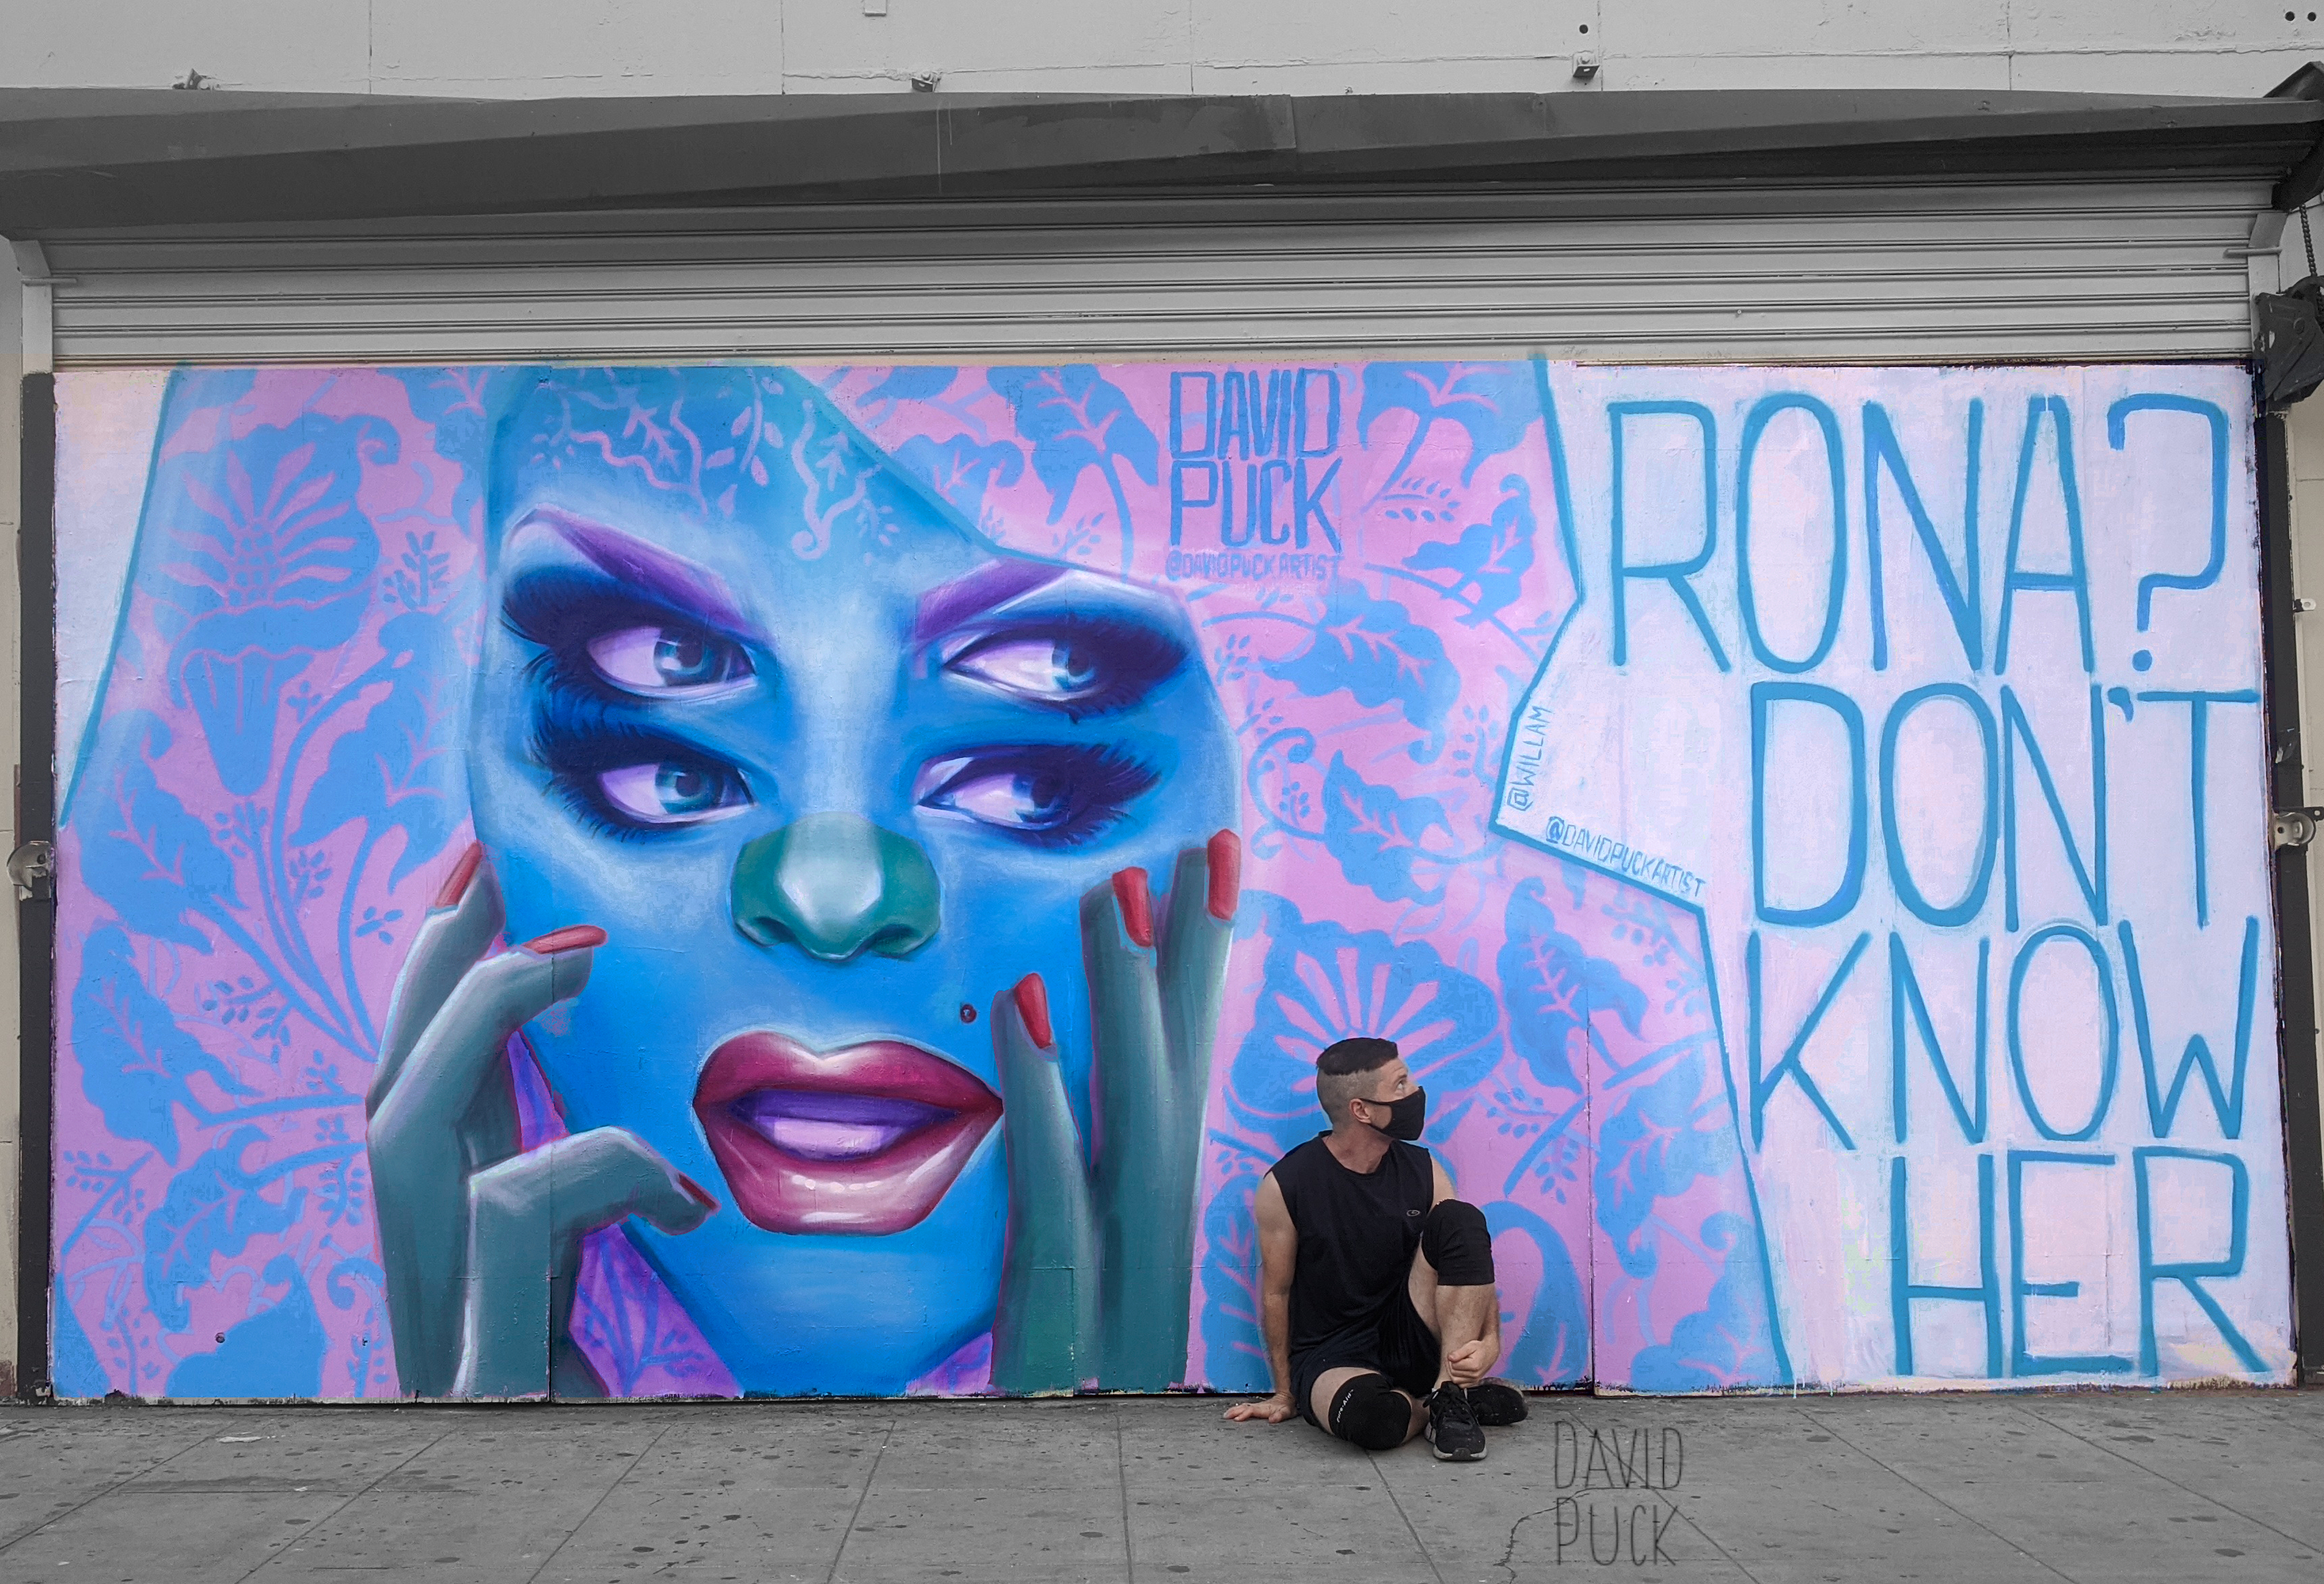 Willam drag queen street art mural, los angeles california